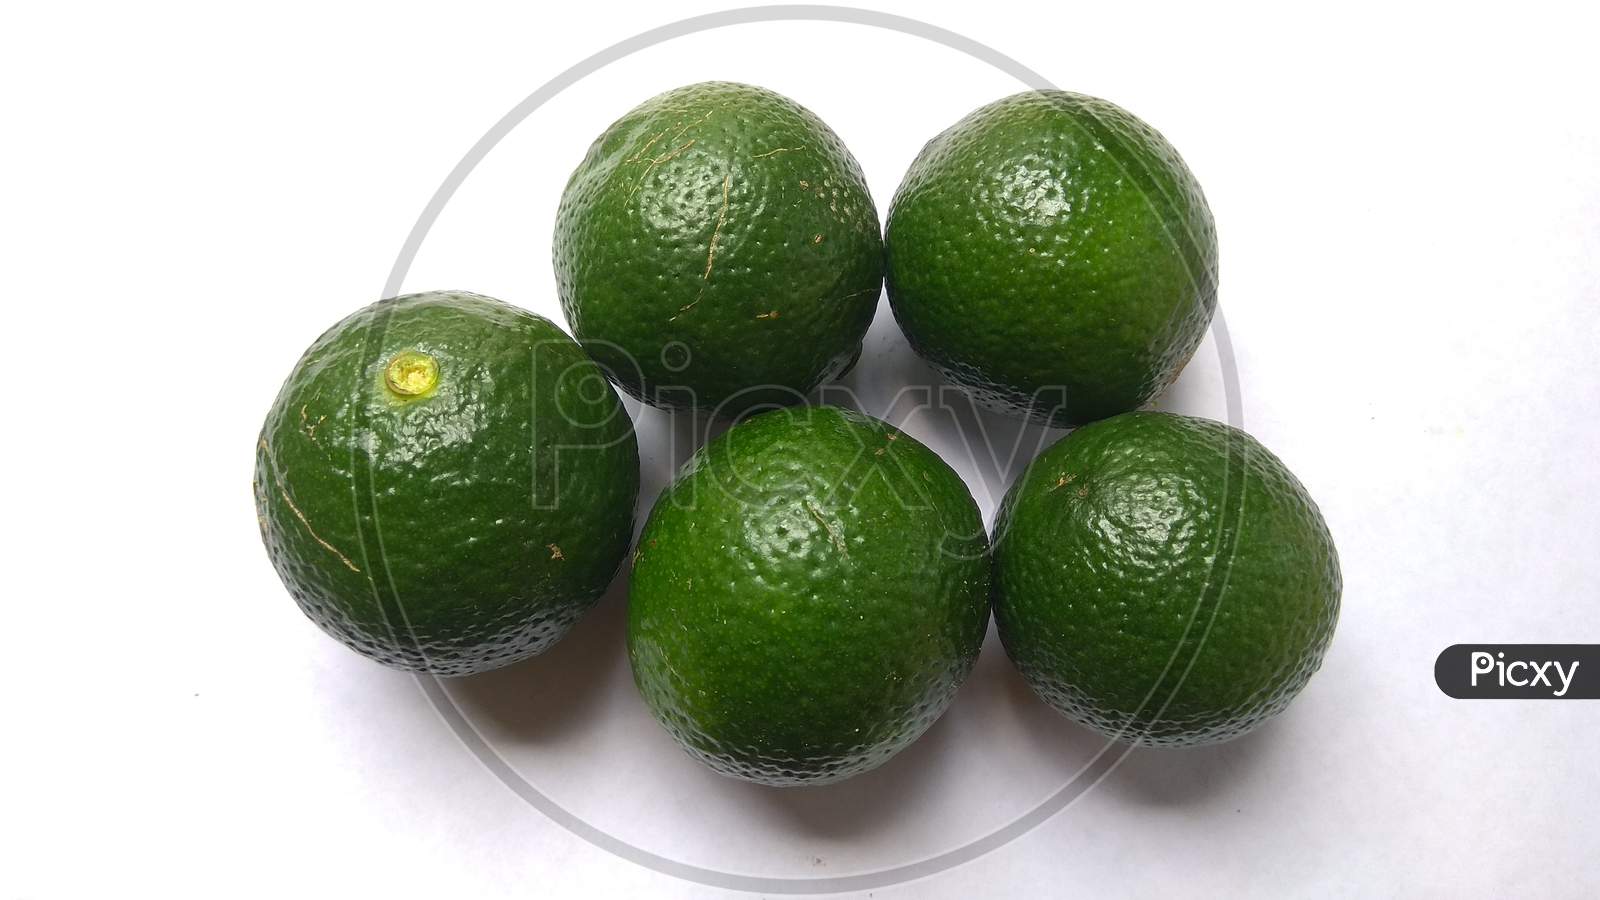 Fresh green lemons isolated on white background.